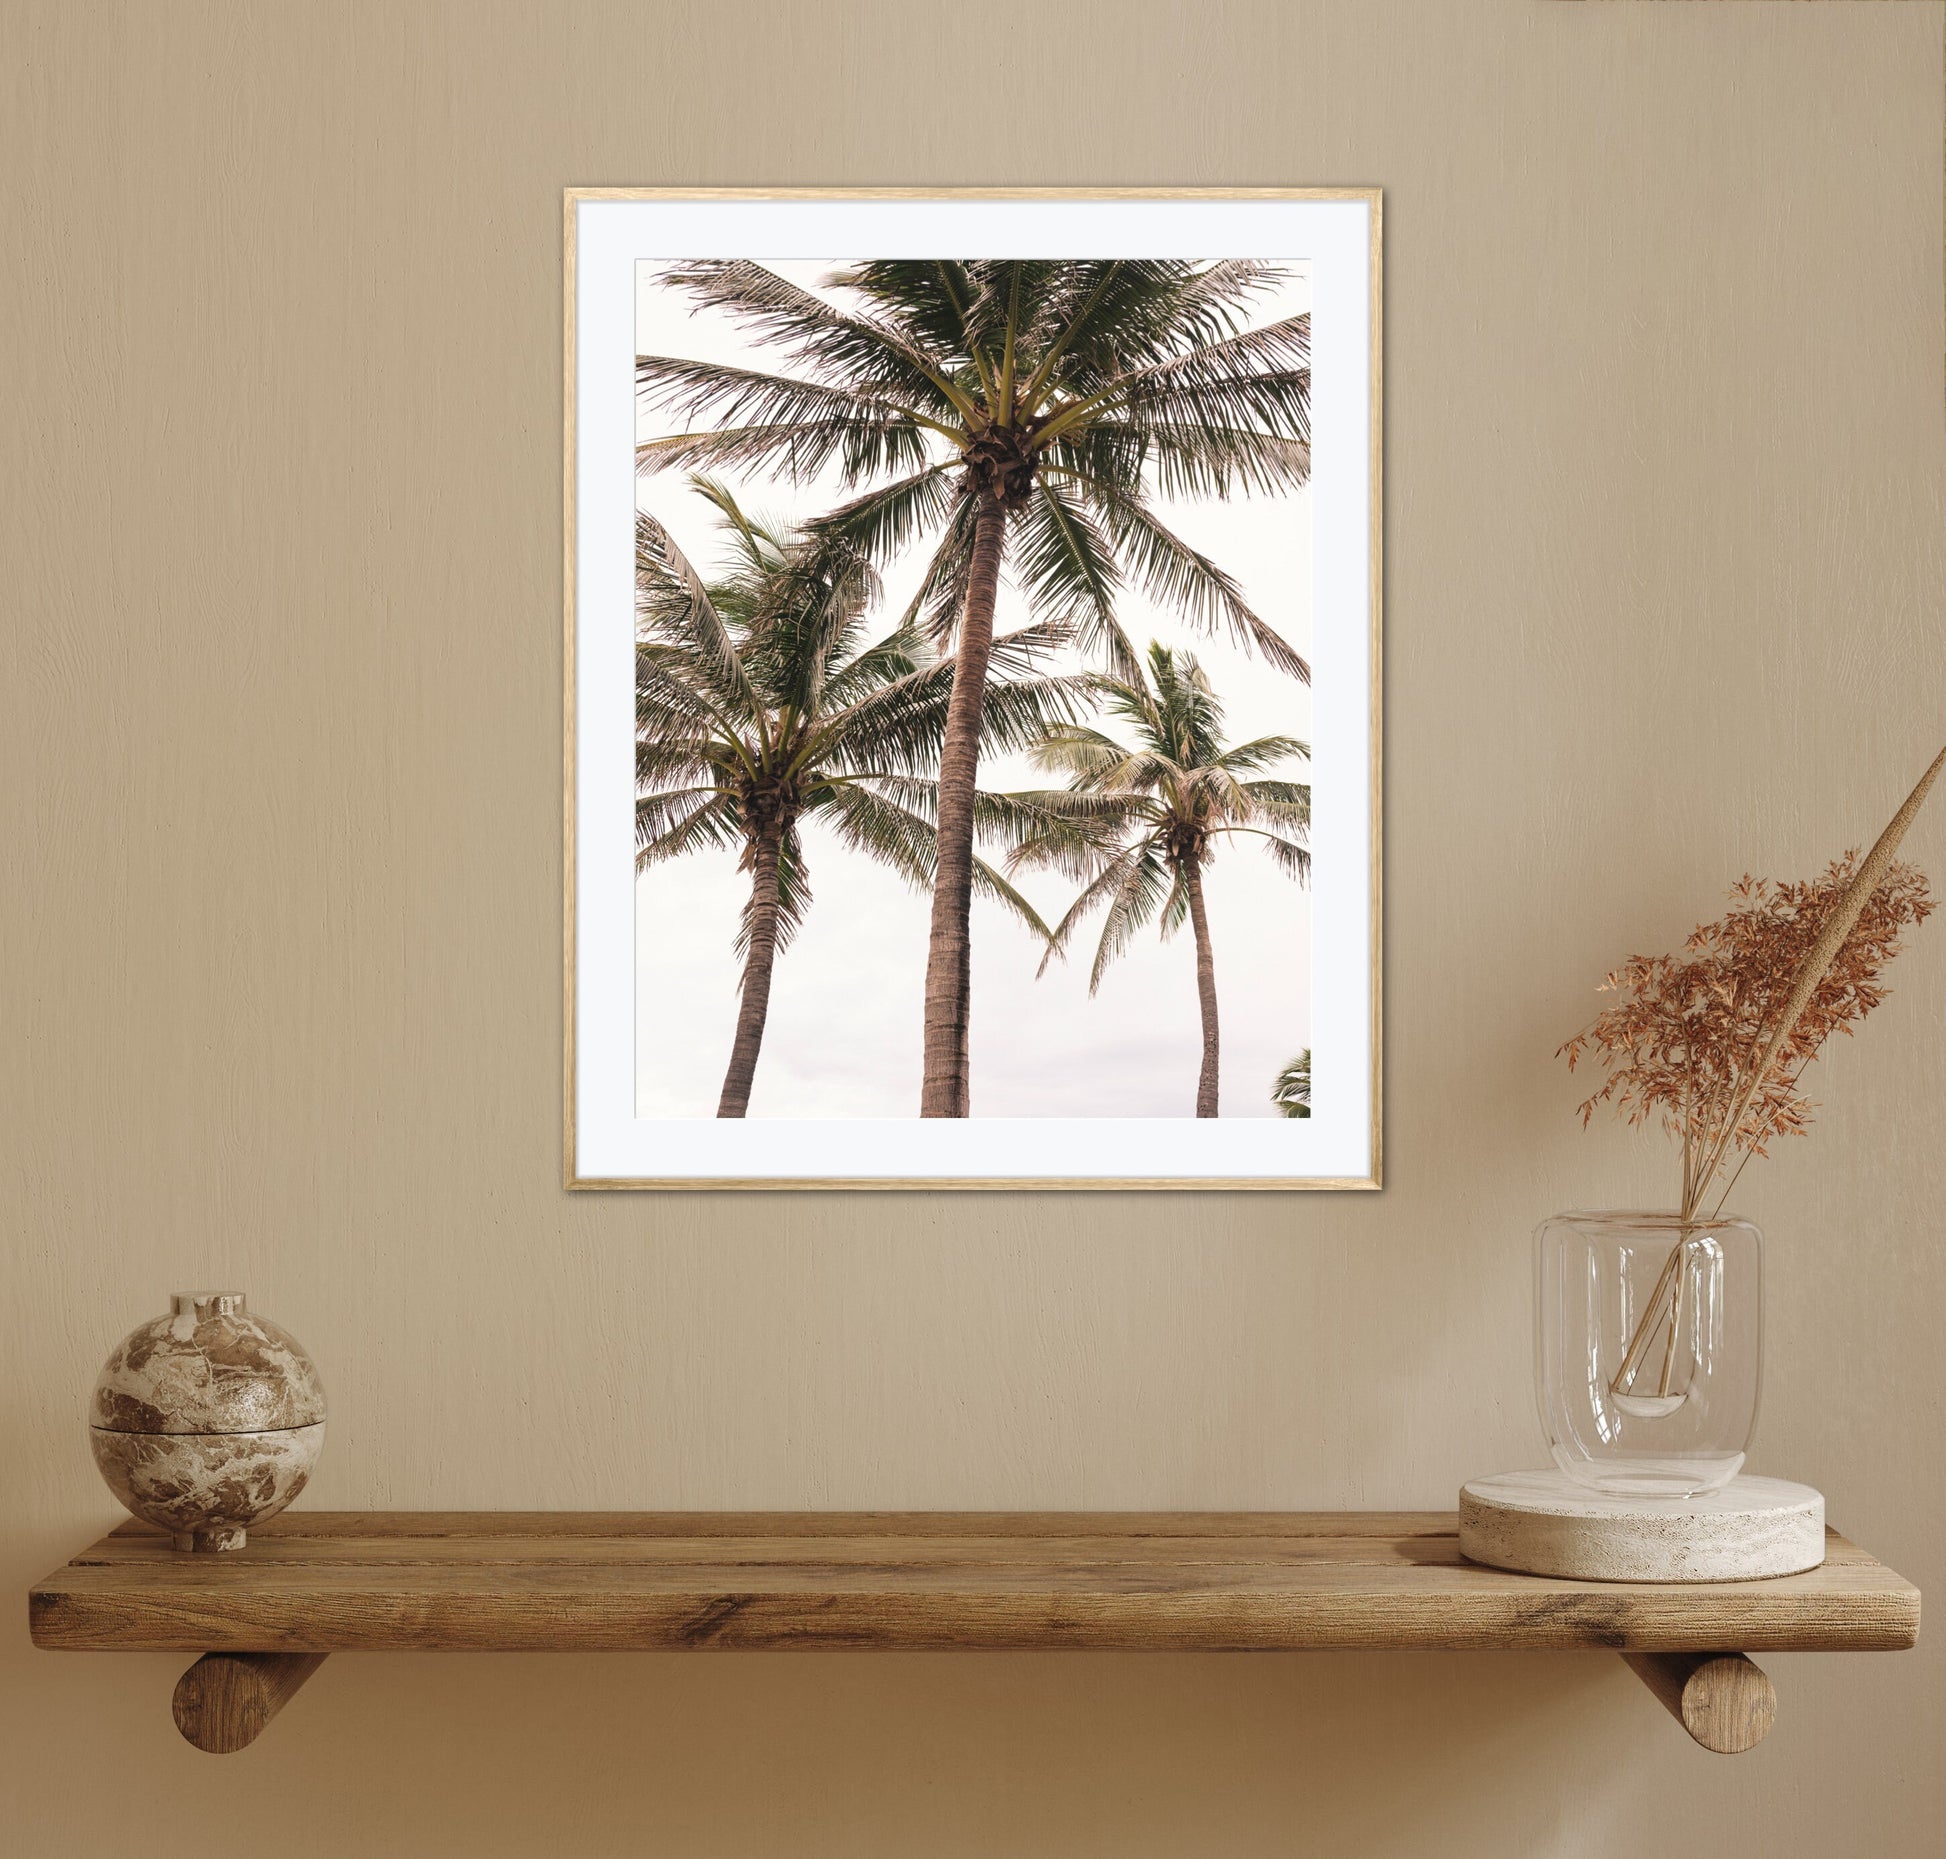 Set of three DIGITAL PRINTS, neutral beach print, palm tree print, surfboard print, surf printable, beach decor, coastal wall art set